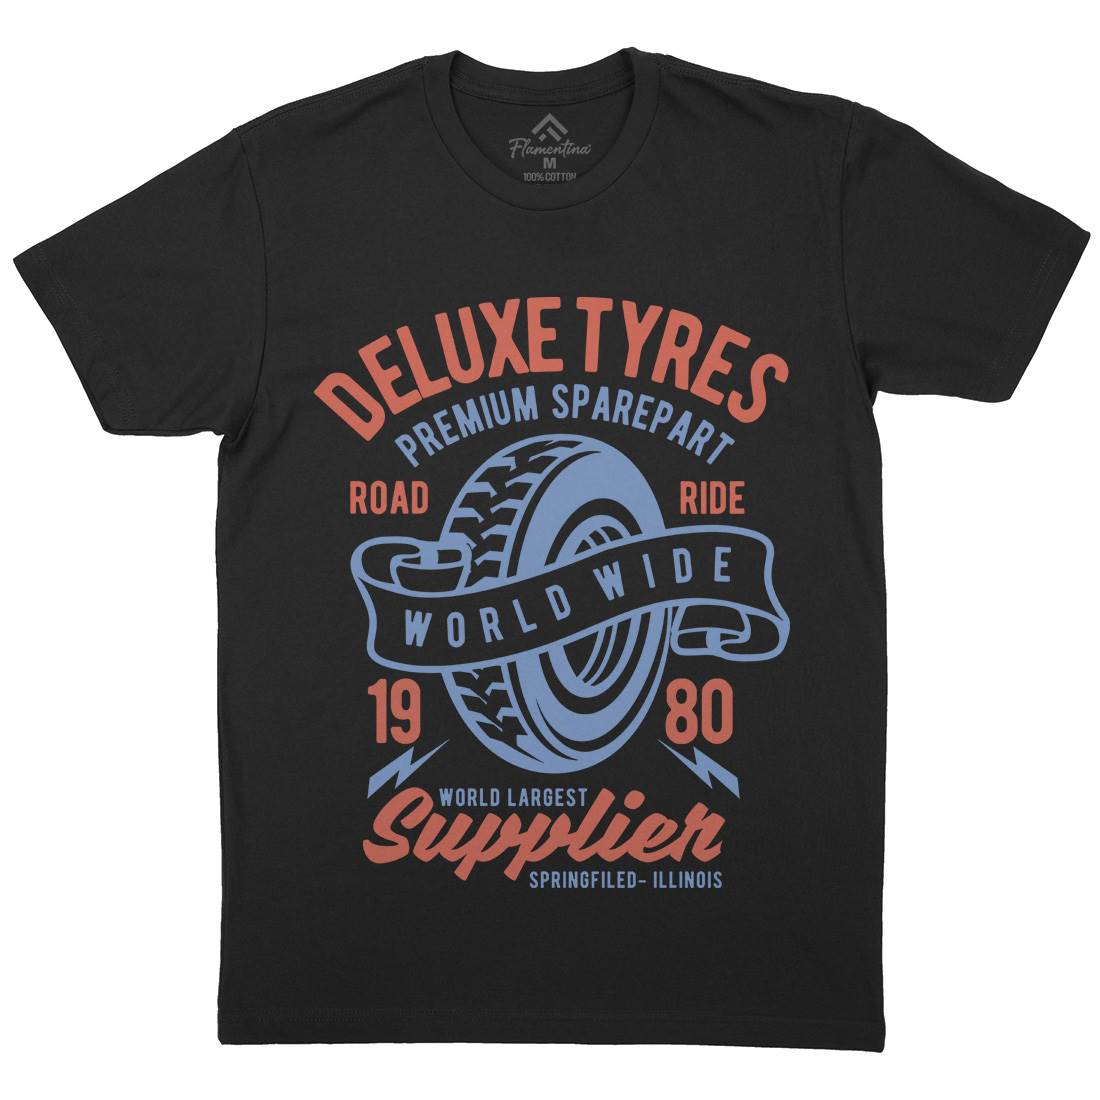 Deluxe Tyres Mens Organic Crew Neck T-Shirt Cars B204